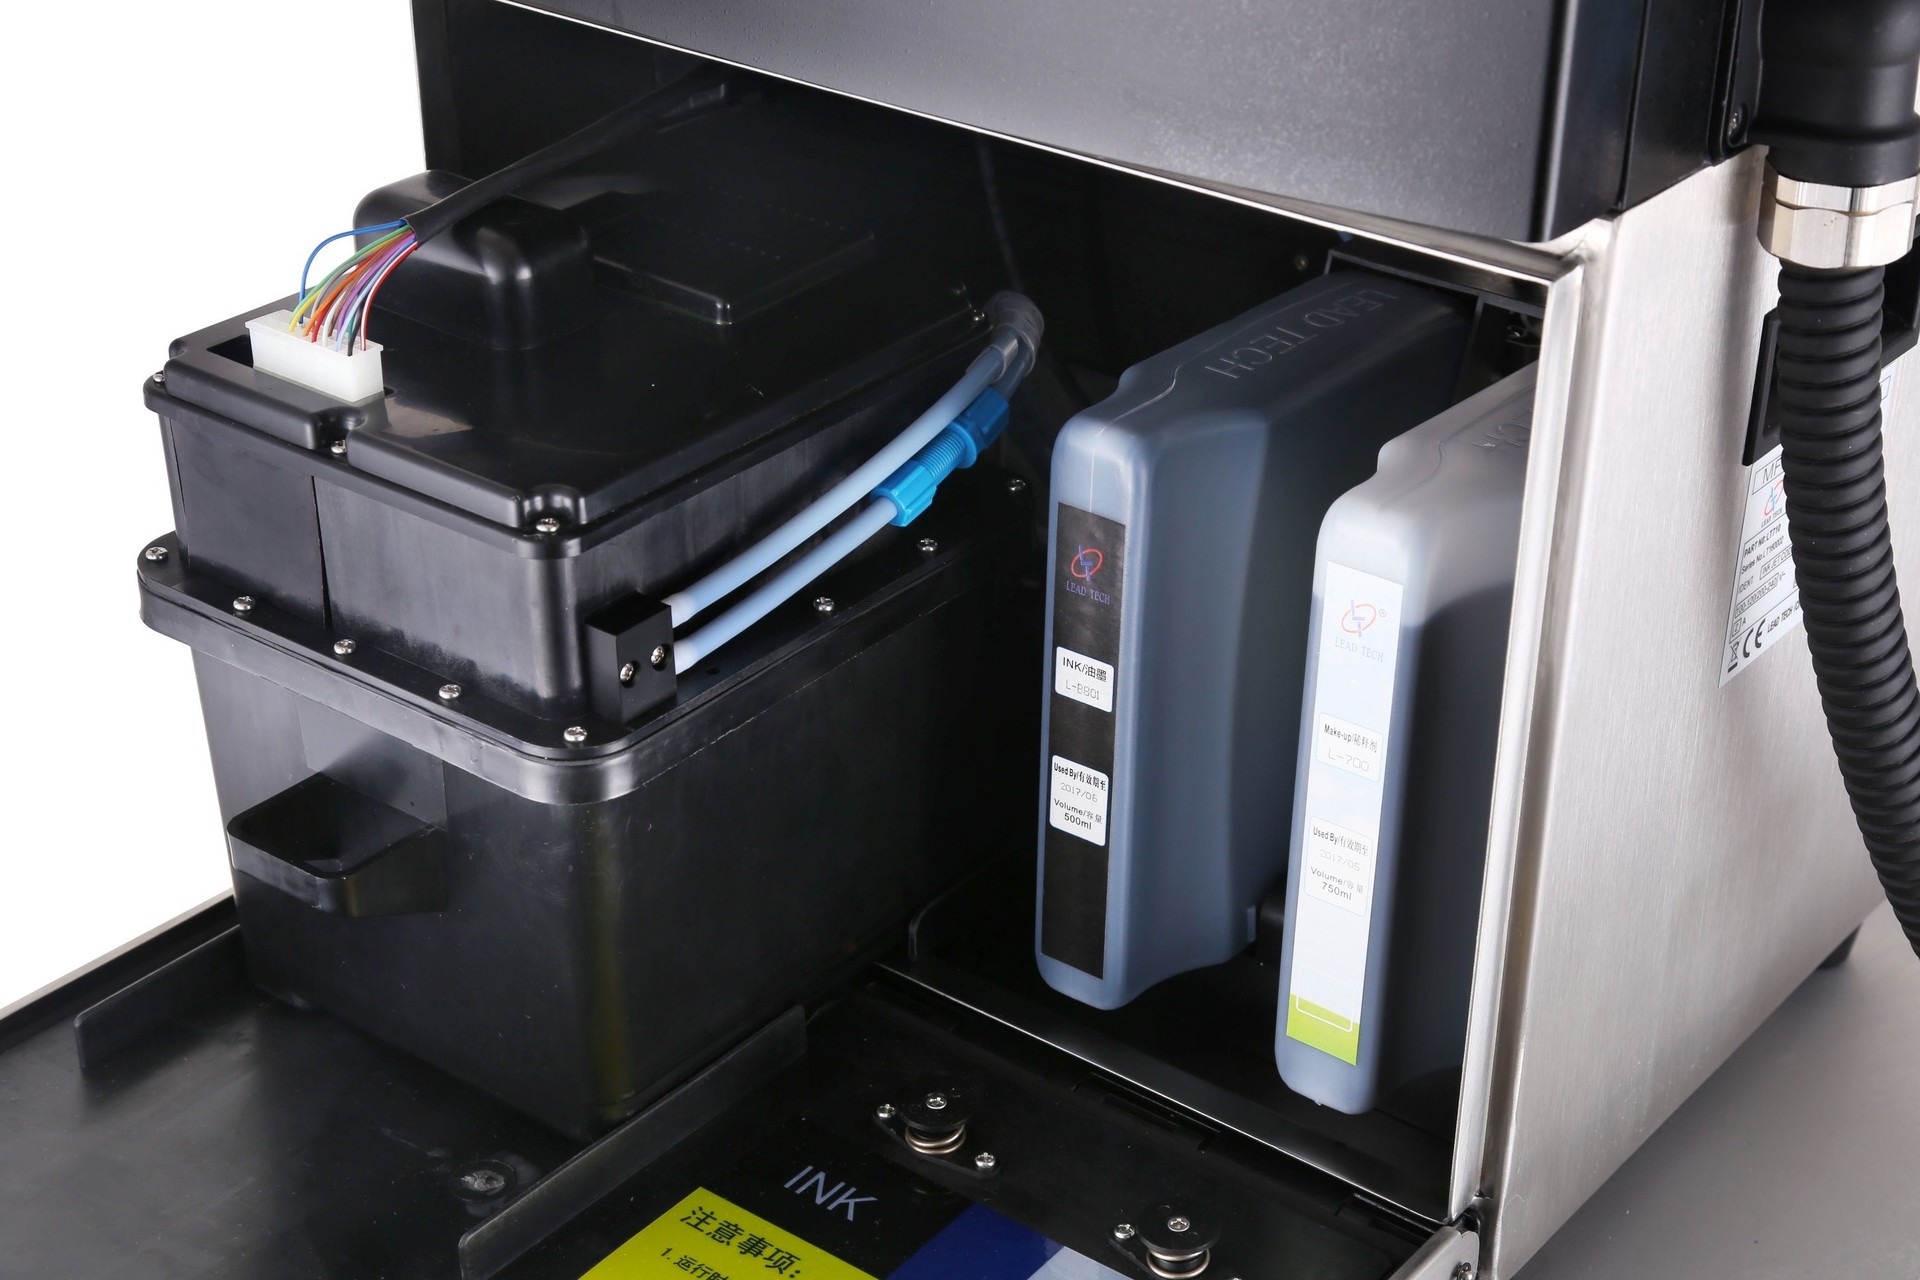 Lead Tech Lt760 Plastic film Cij Inkjet Printer